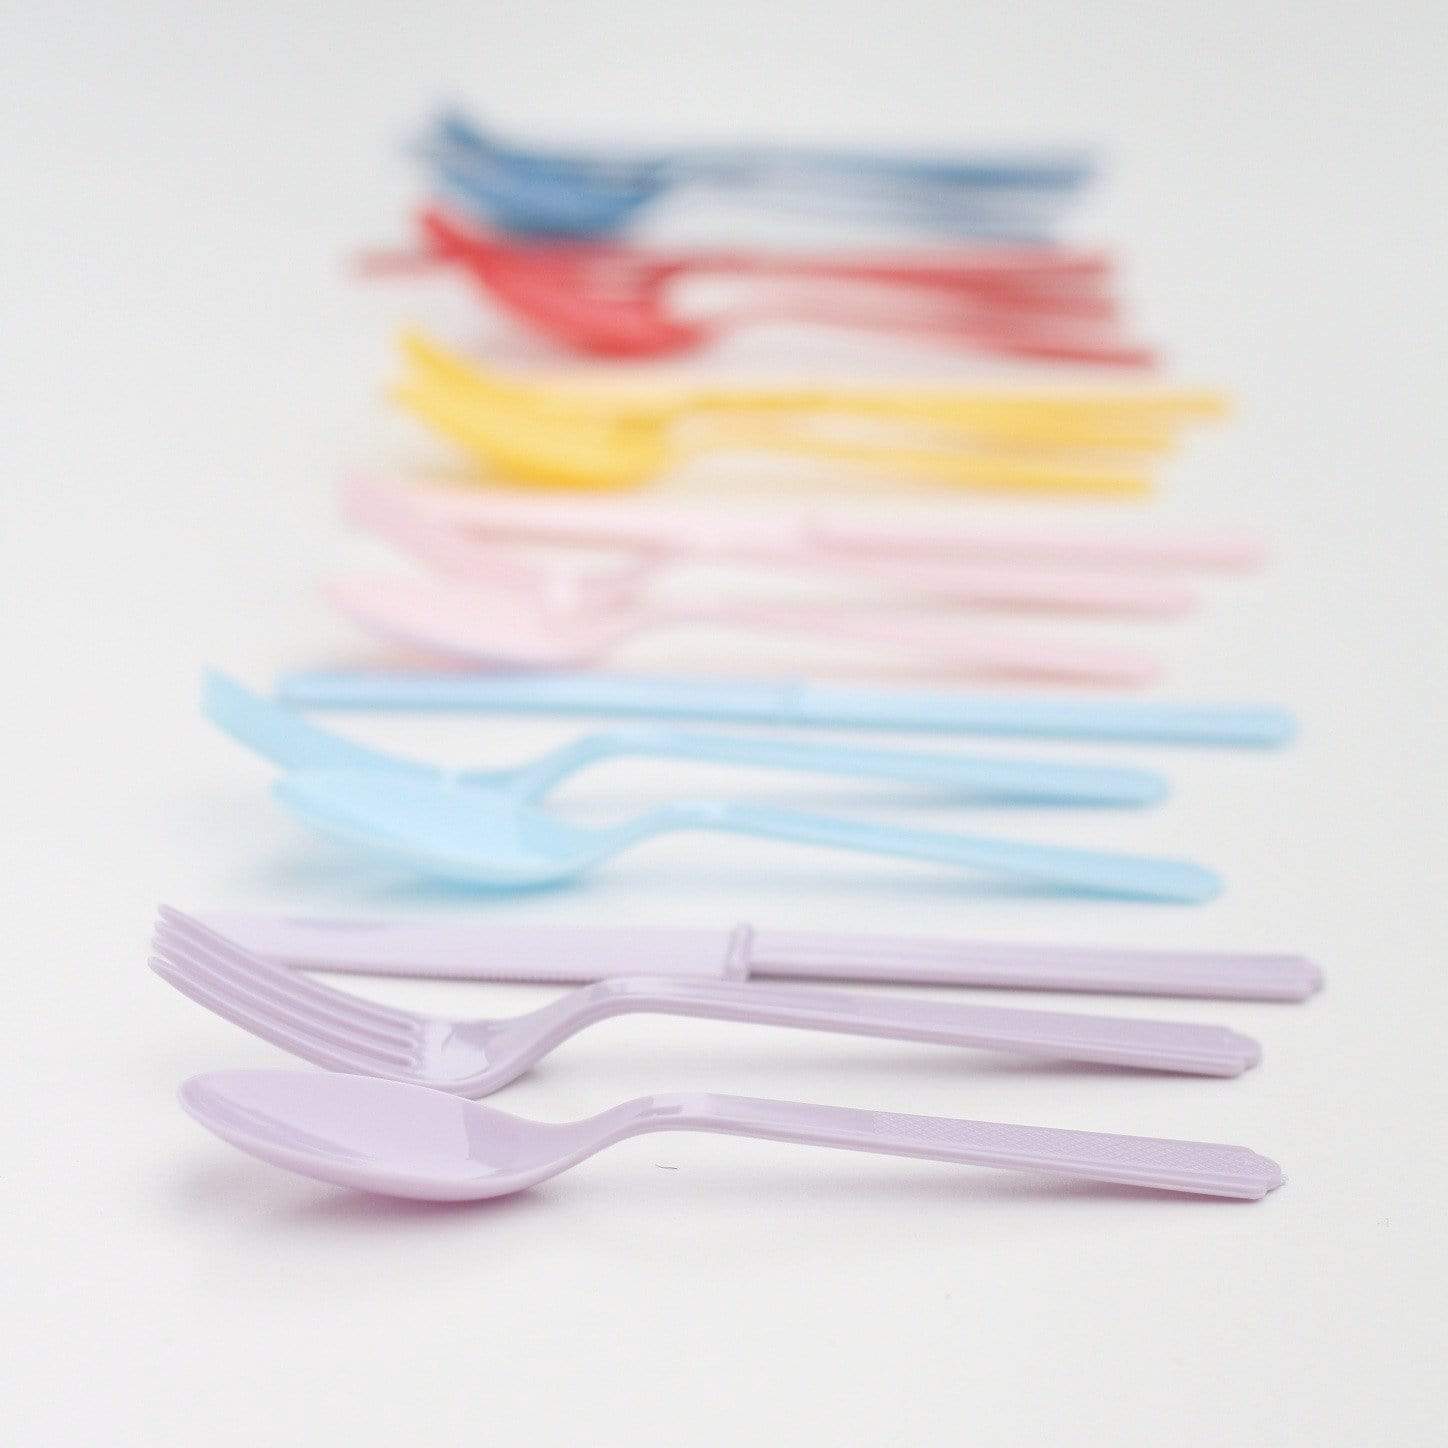 Baby Blue Plastic Cutlery | Disposable Party Utensils Unique